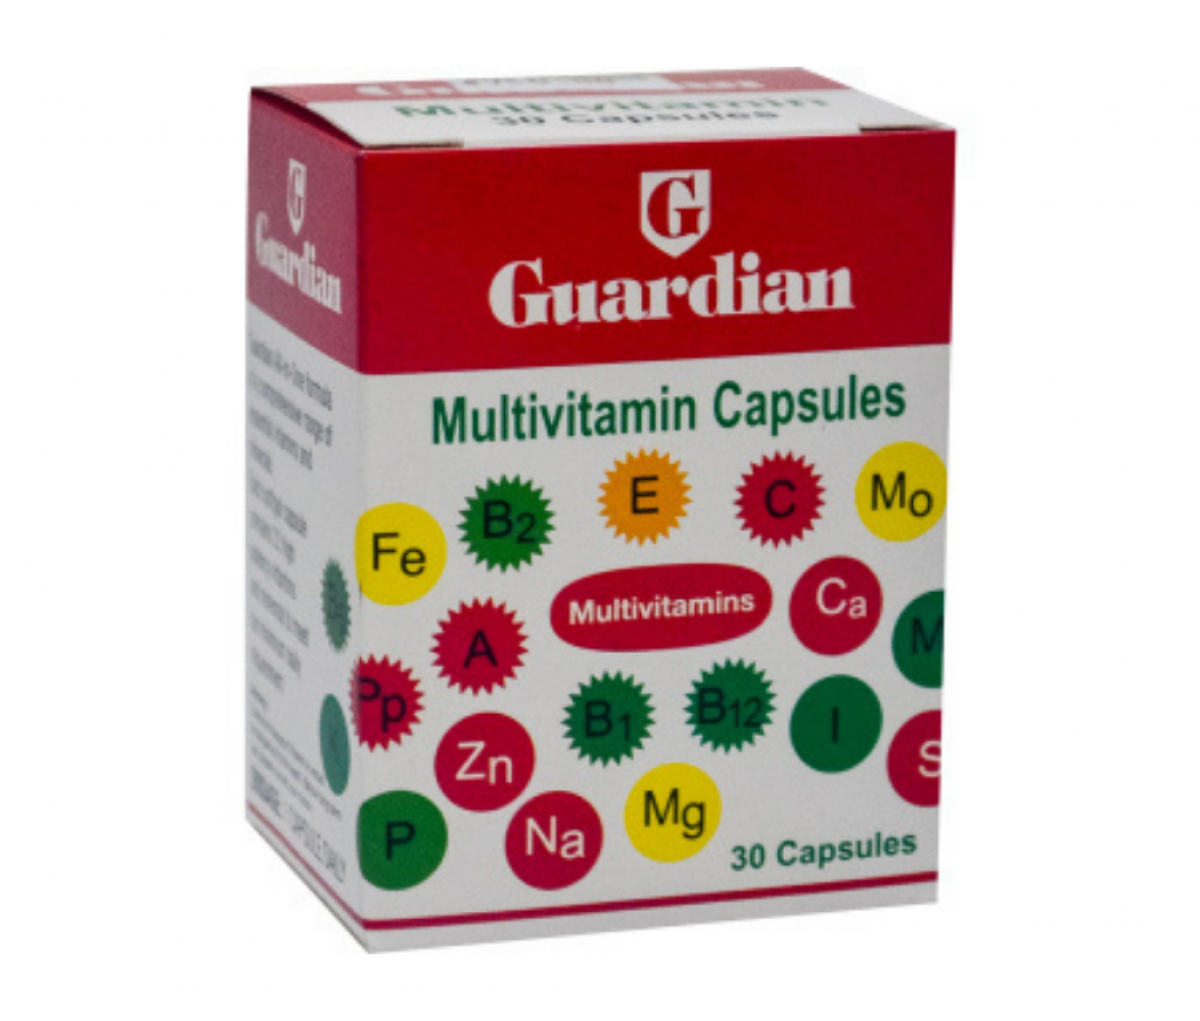 Guardian Multivitamin Capsules